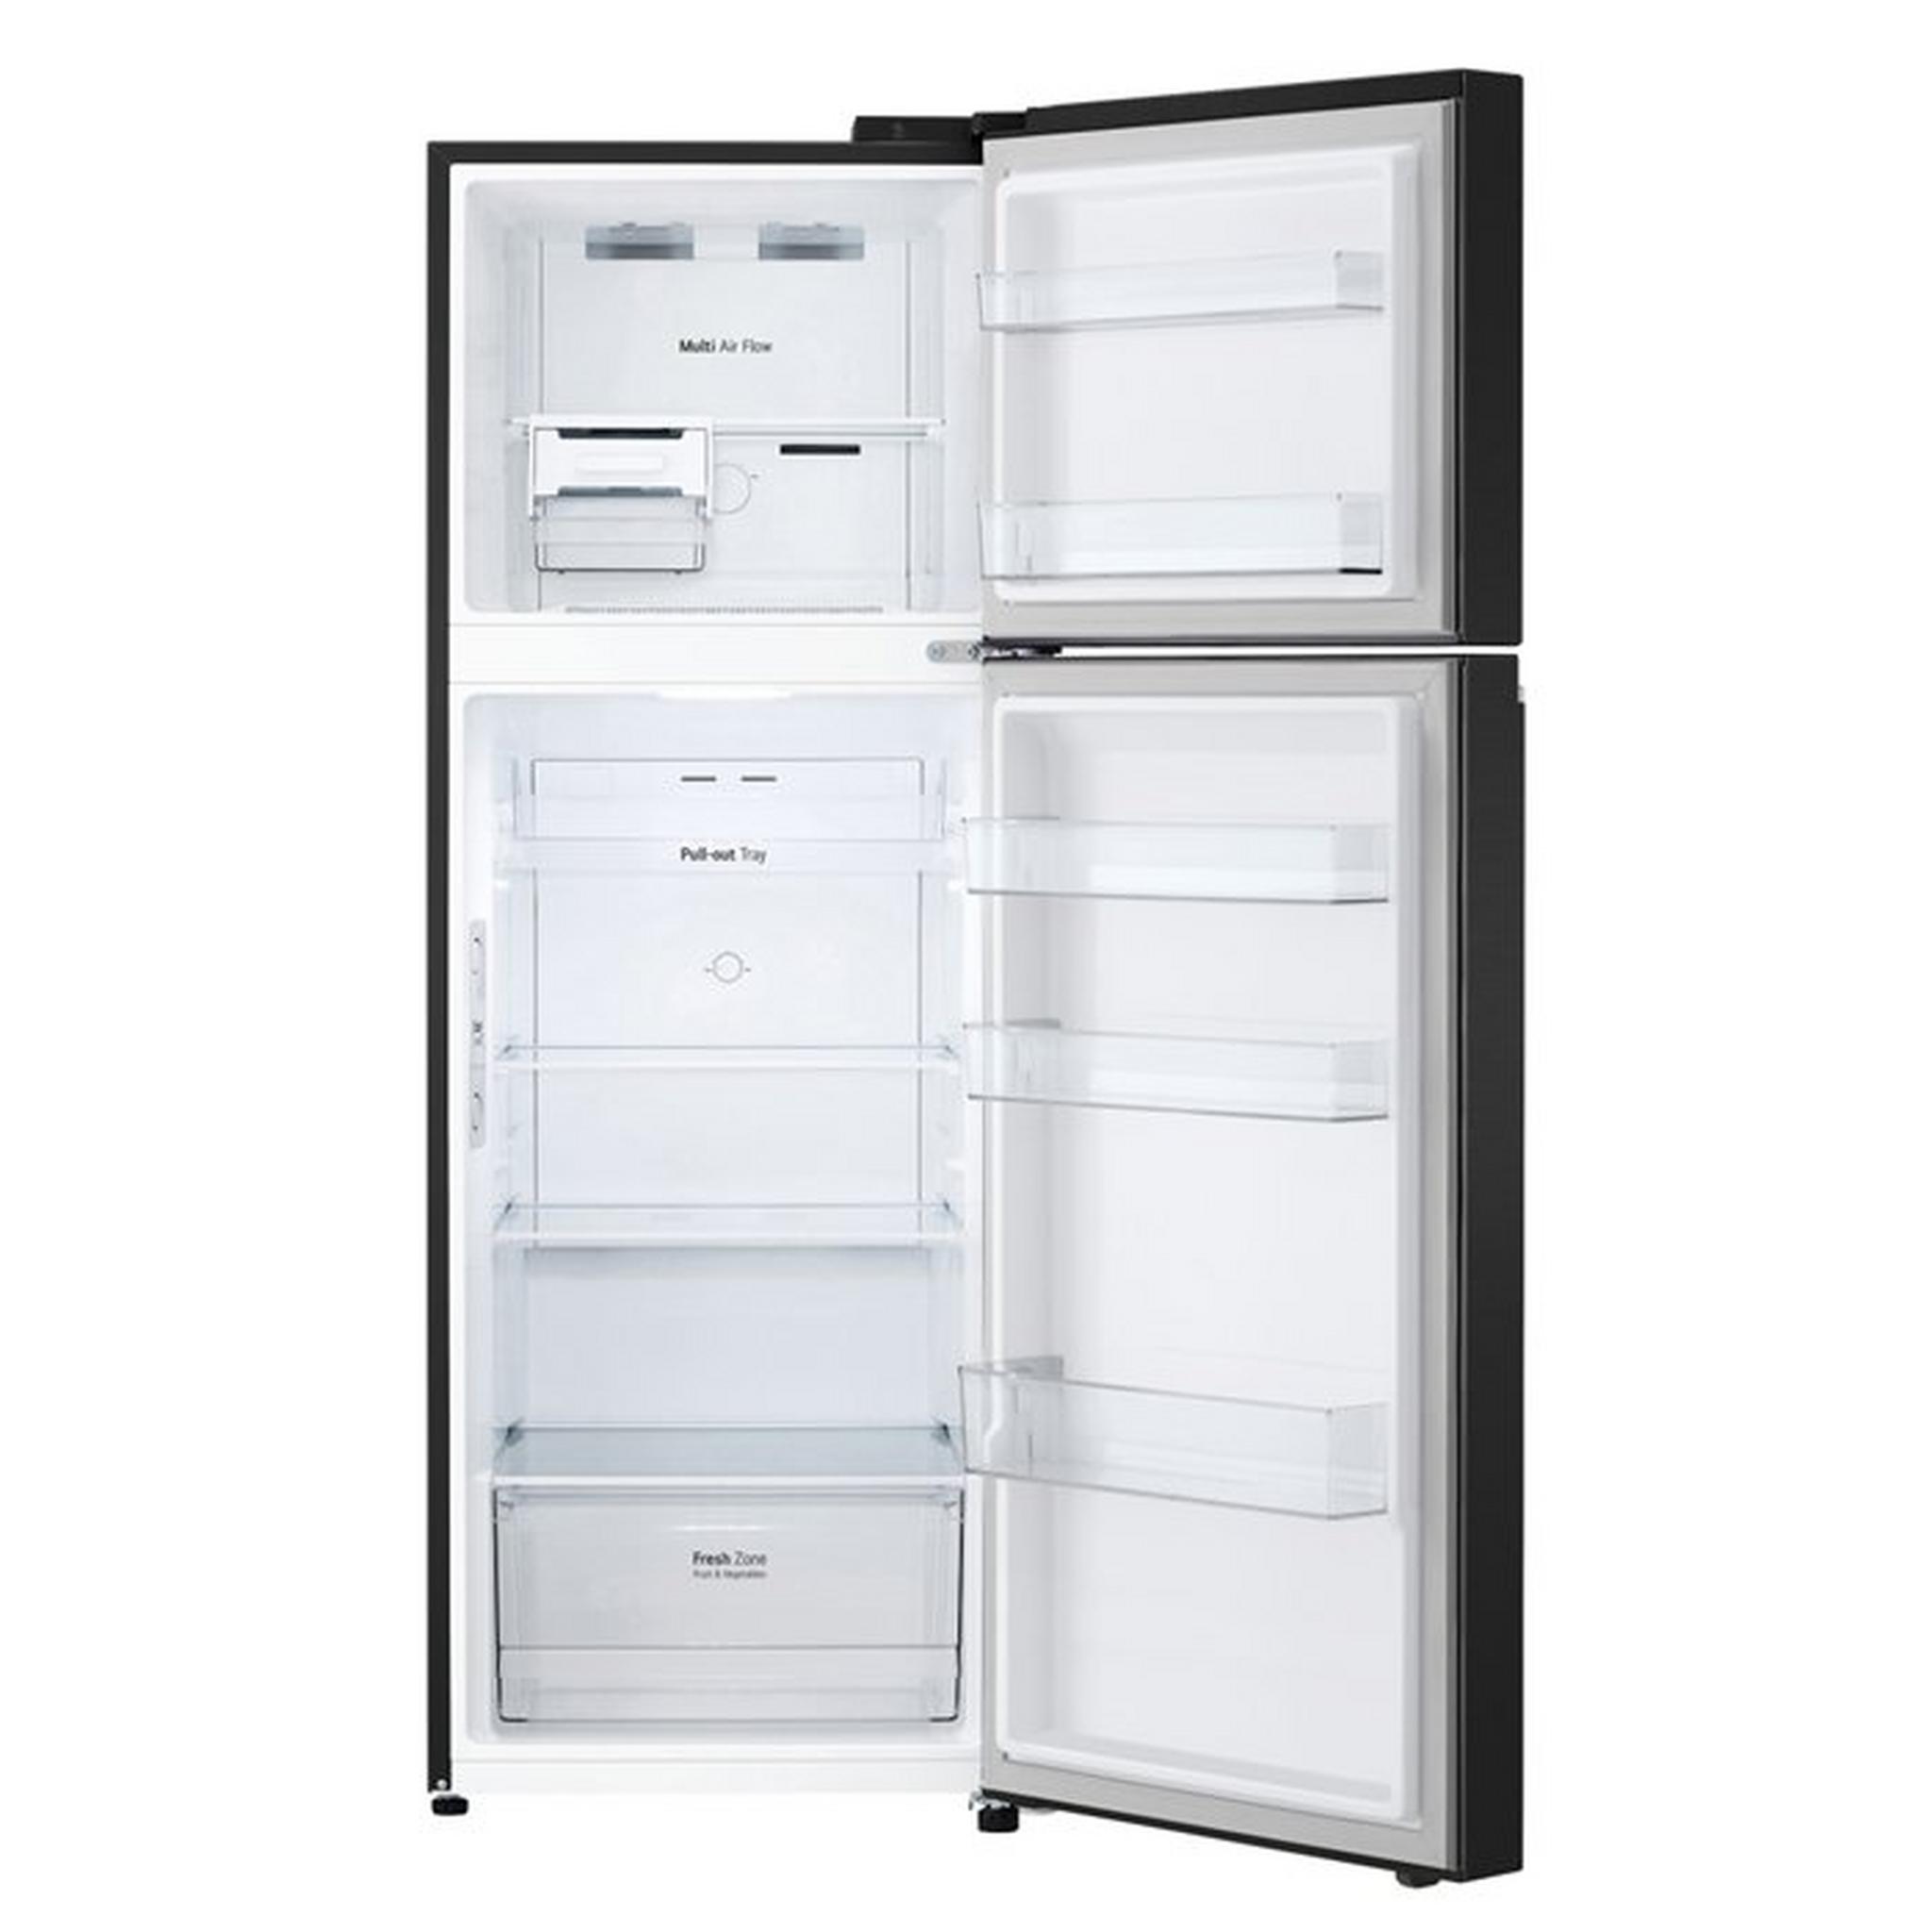 LG Top Freezer Refrigerator, 12CFT, 335 Liters, GN-B332PXGBABLREEF – Black